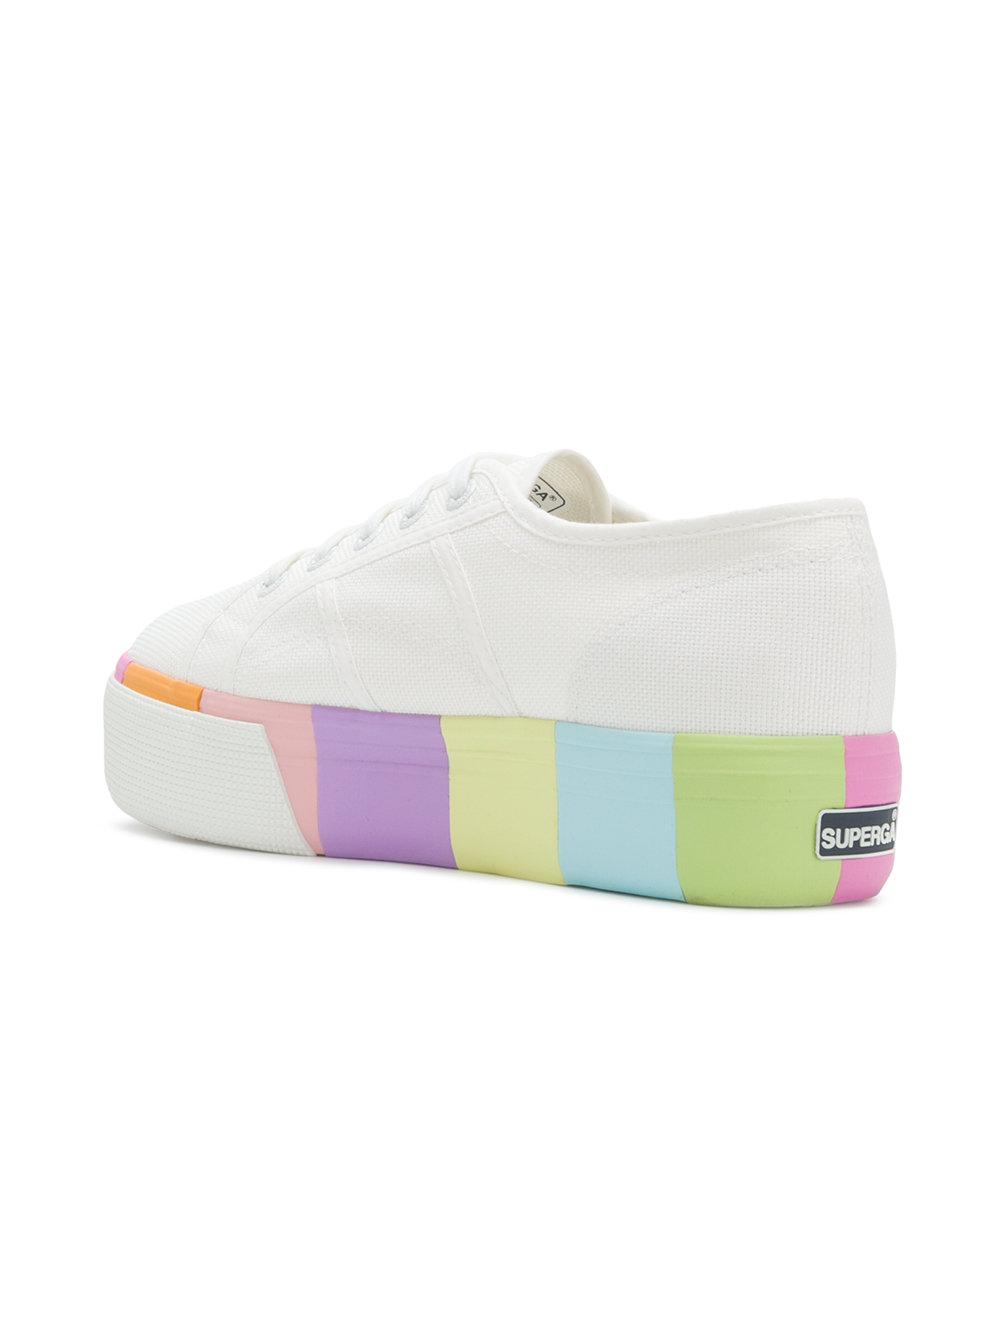 Superga Rainbow Platform Sole Sneakers in White | Lyst